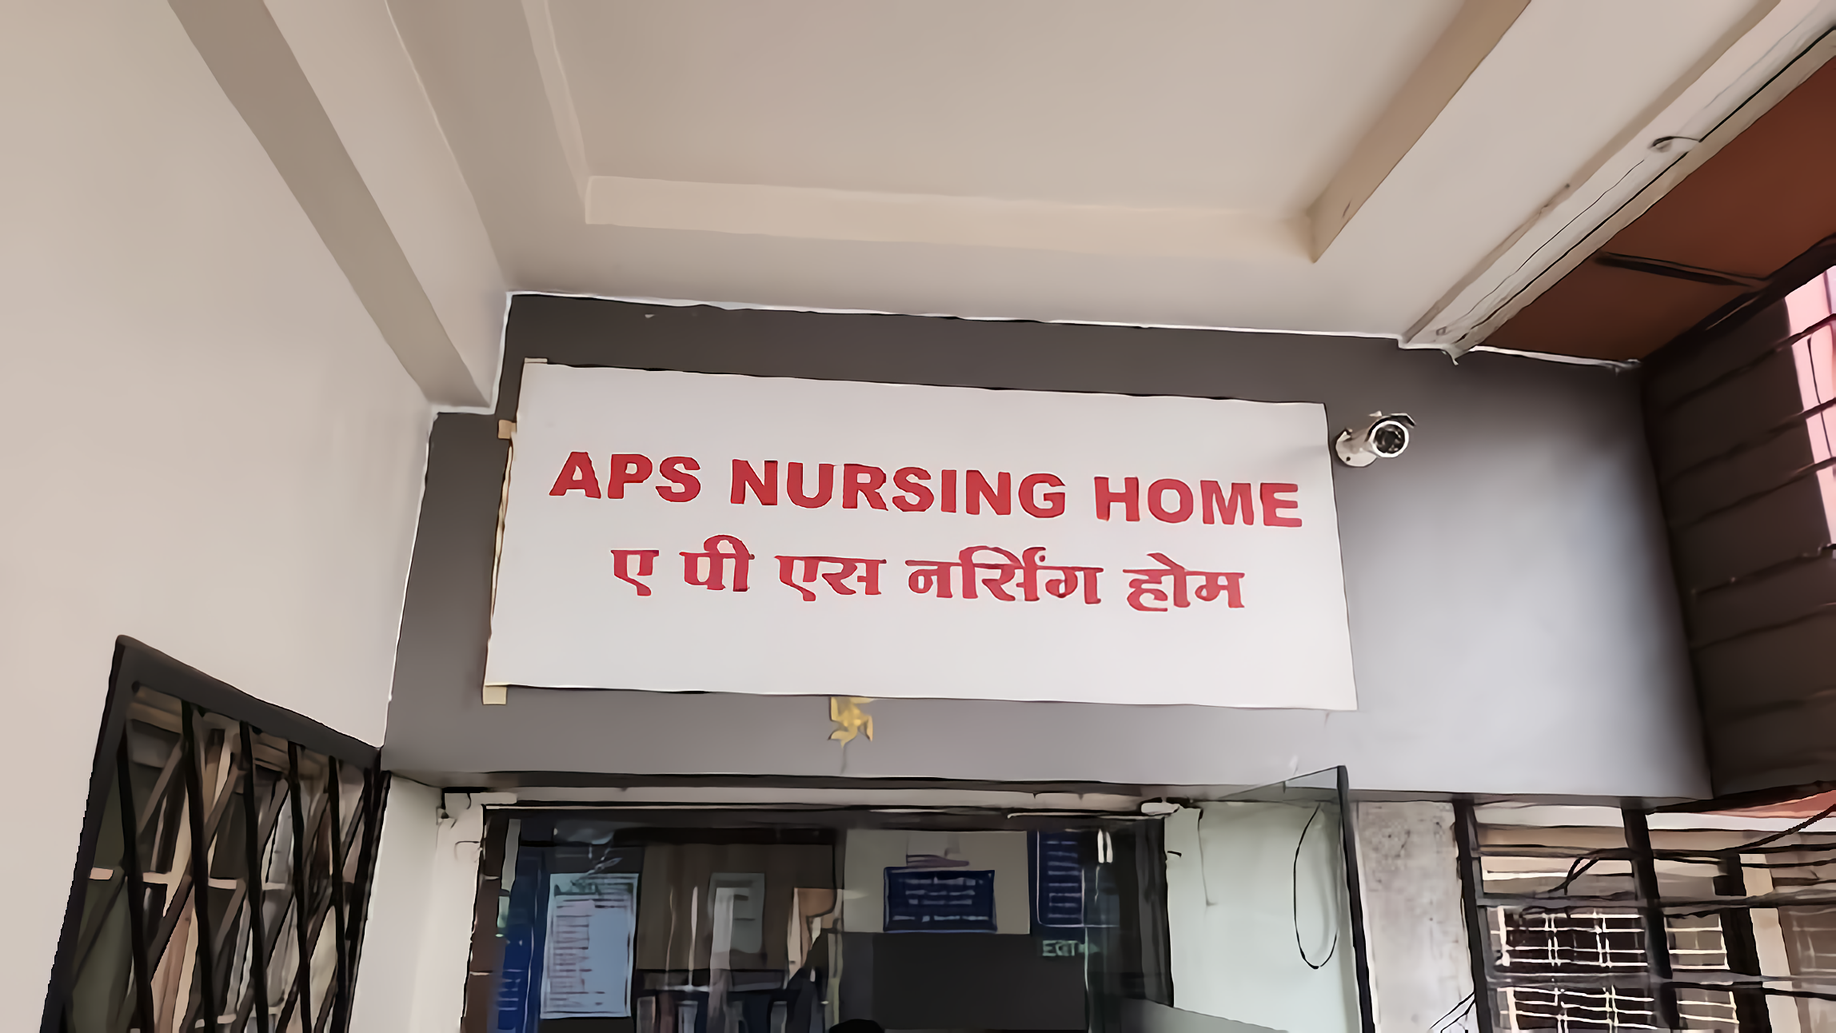 APS Nursing Home photo